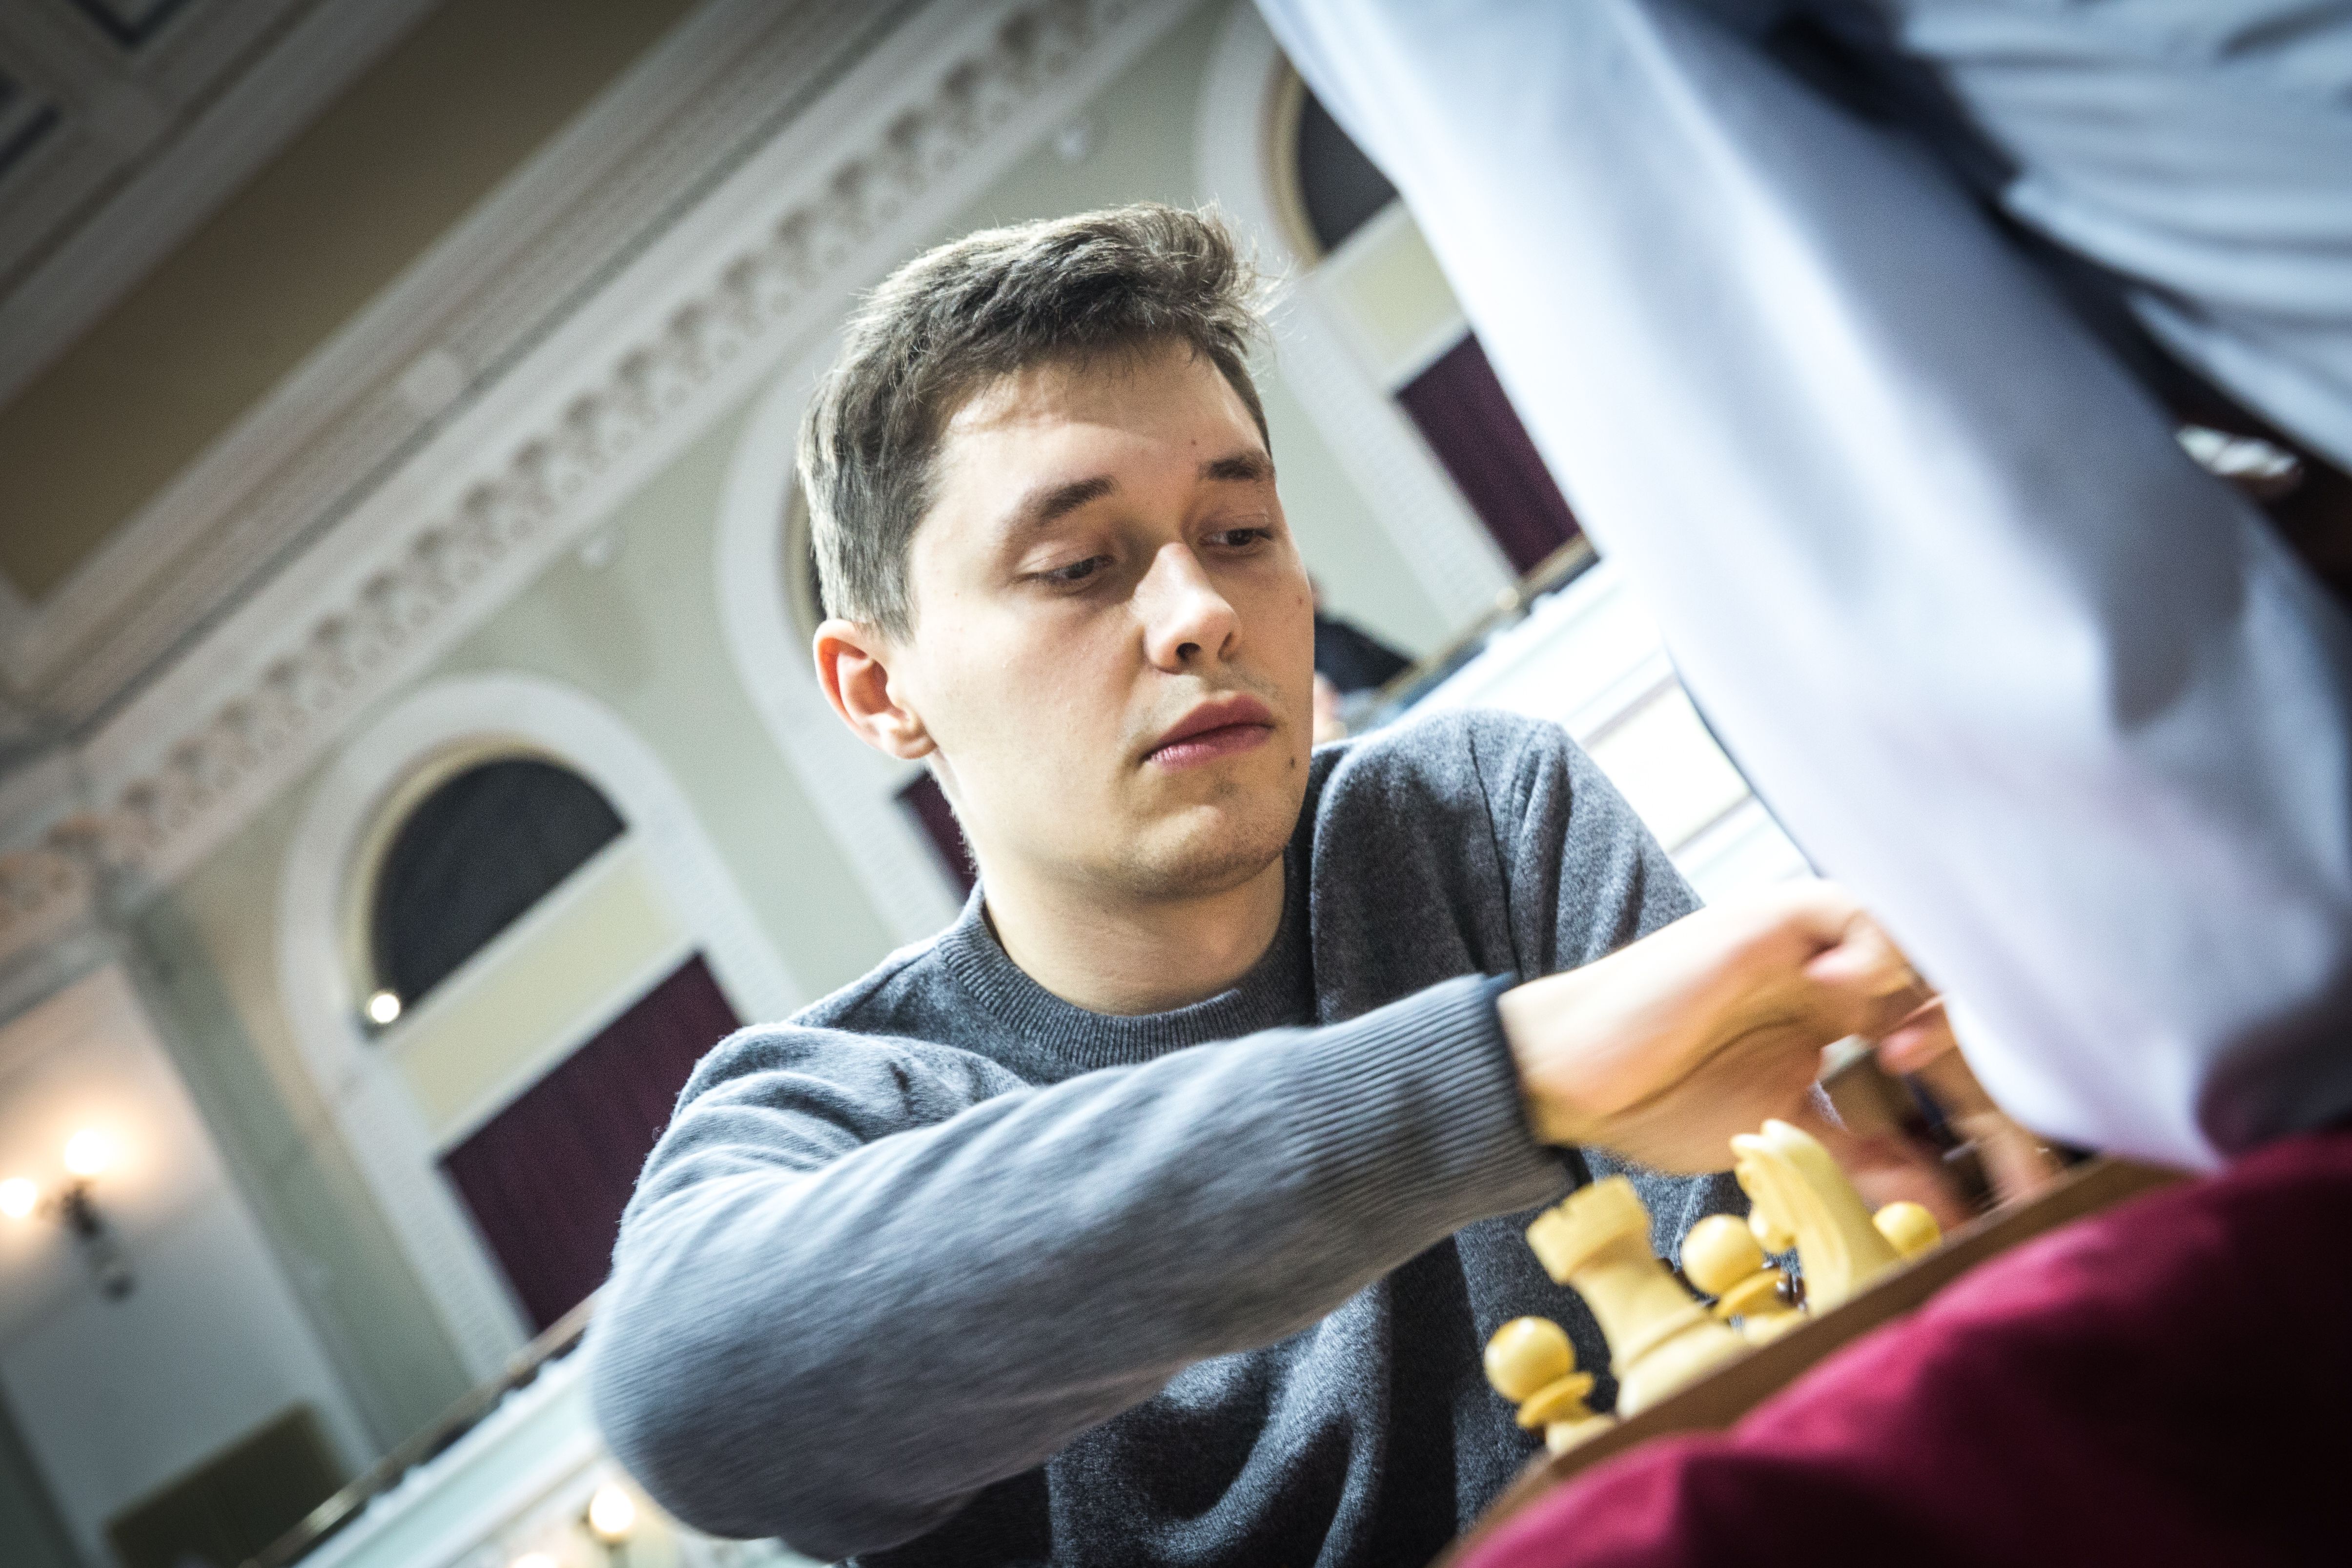 FIDE Grand Swiss 2023: Vidit Wins, Nakamura Claims Candidates Spot - Chess .com